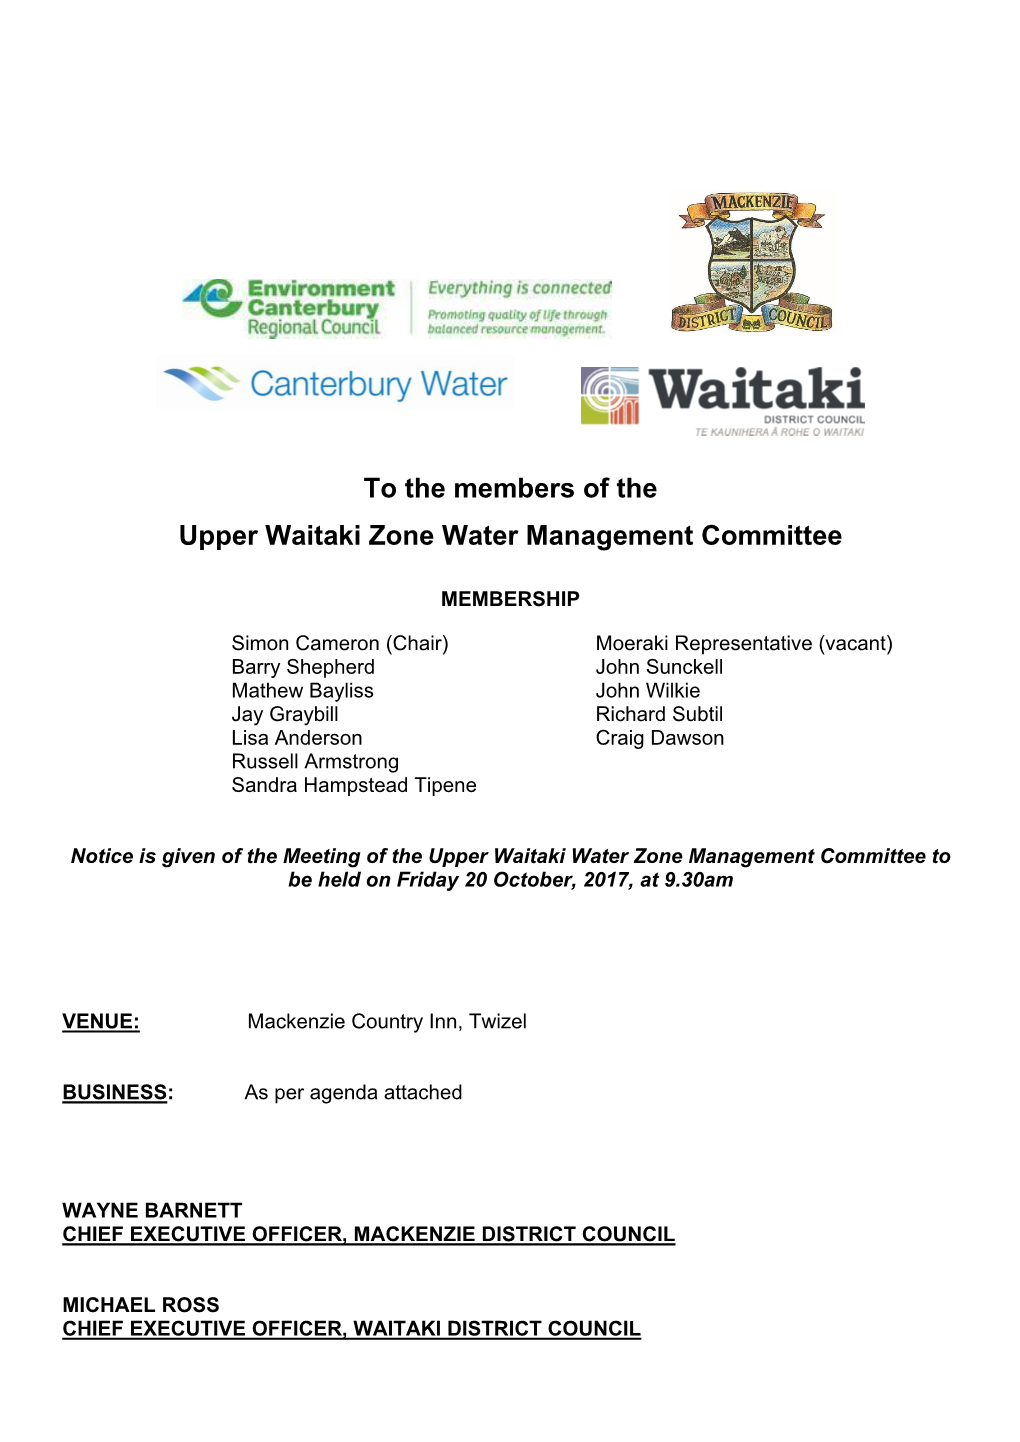 To the Members of the Upper Waitaki Zone Water Management Committee